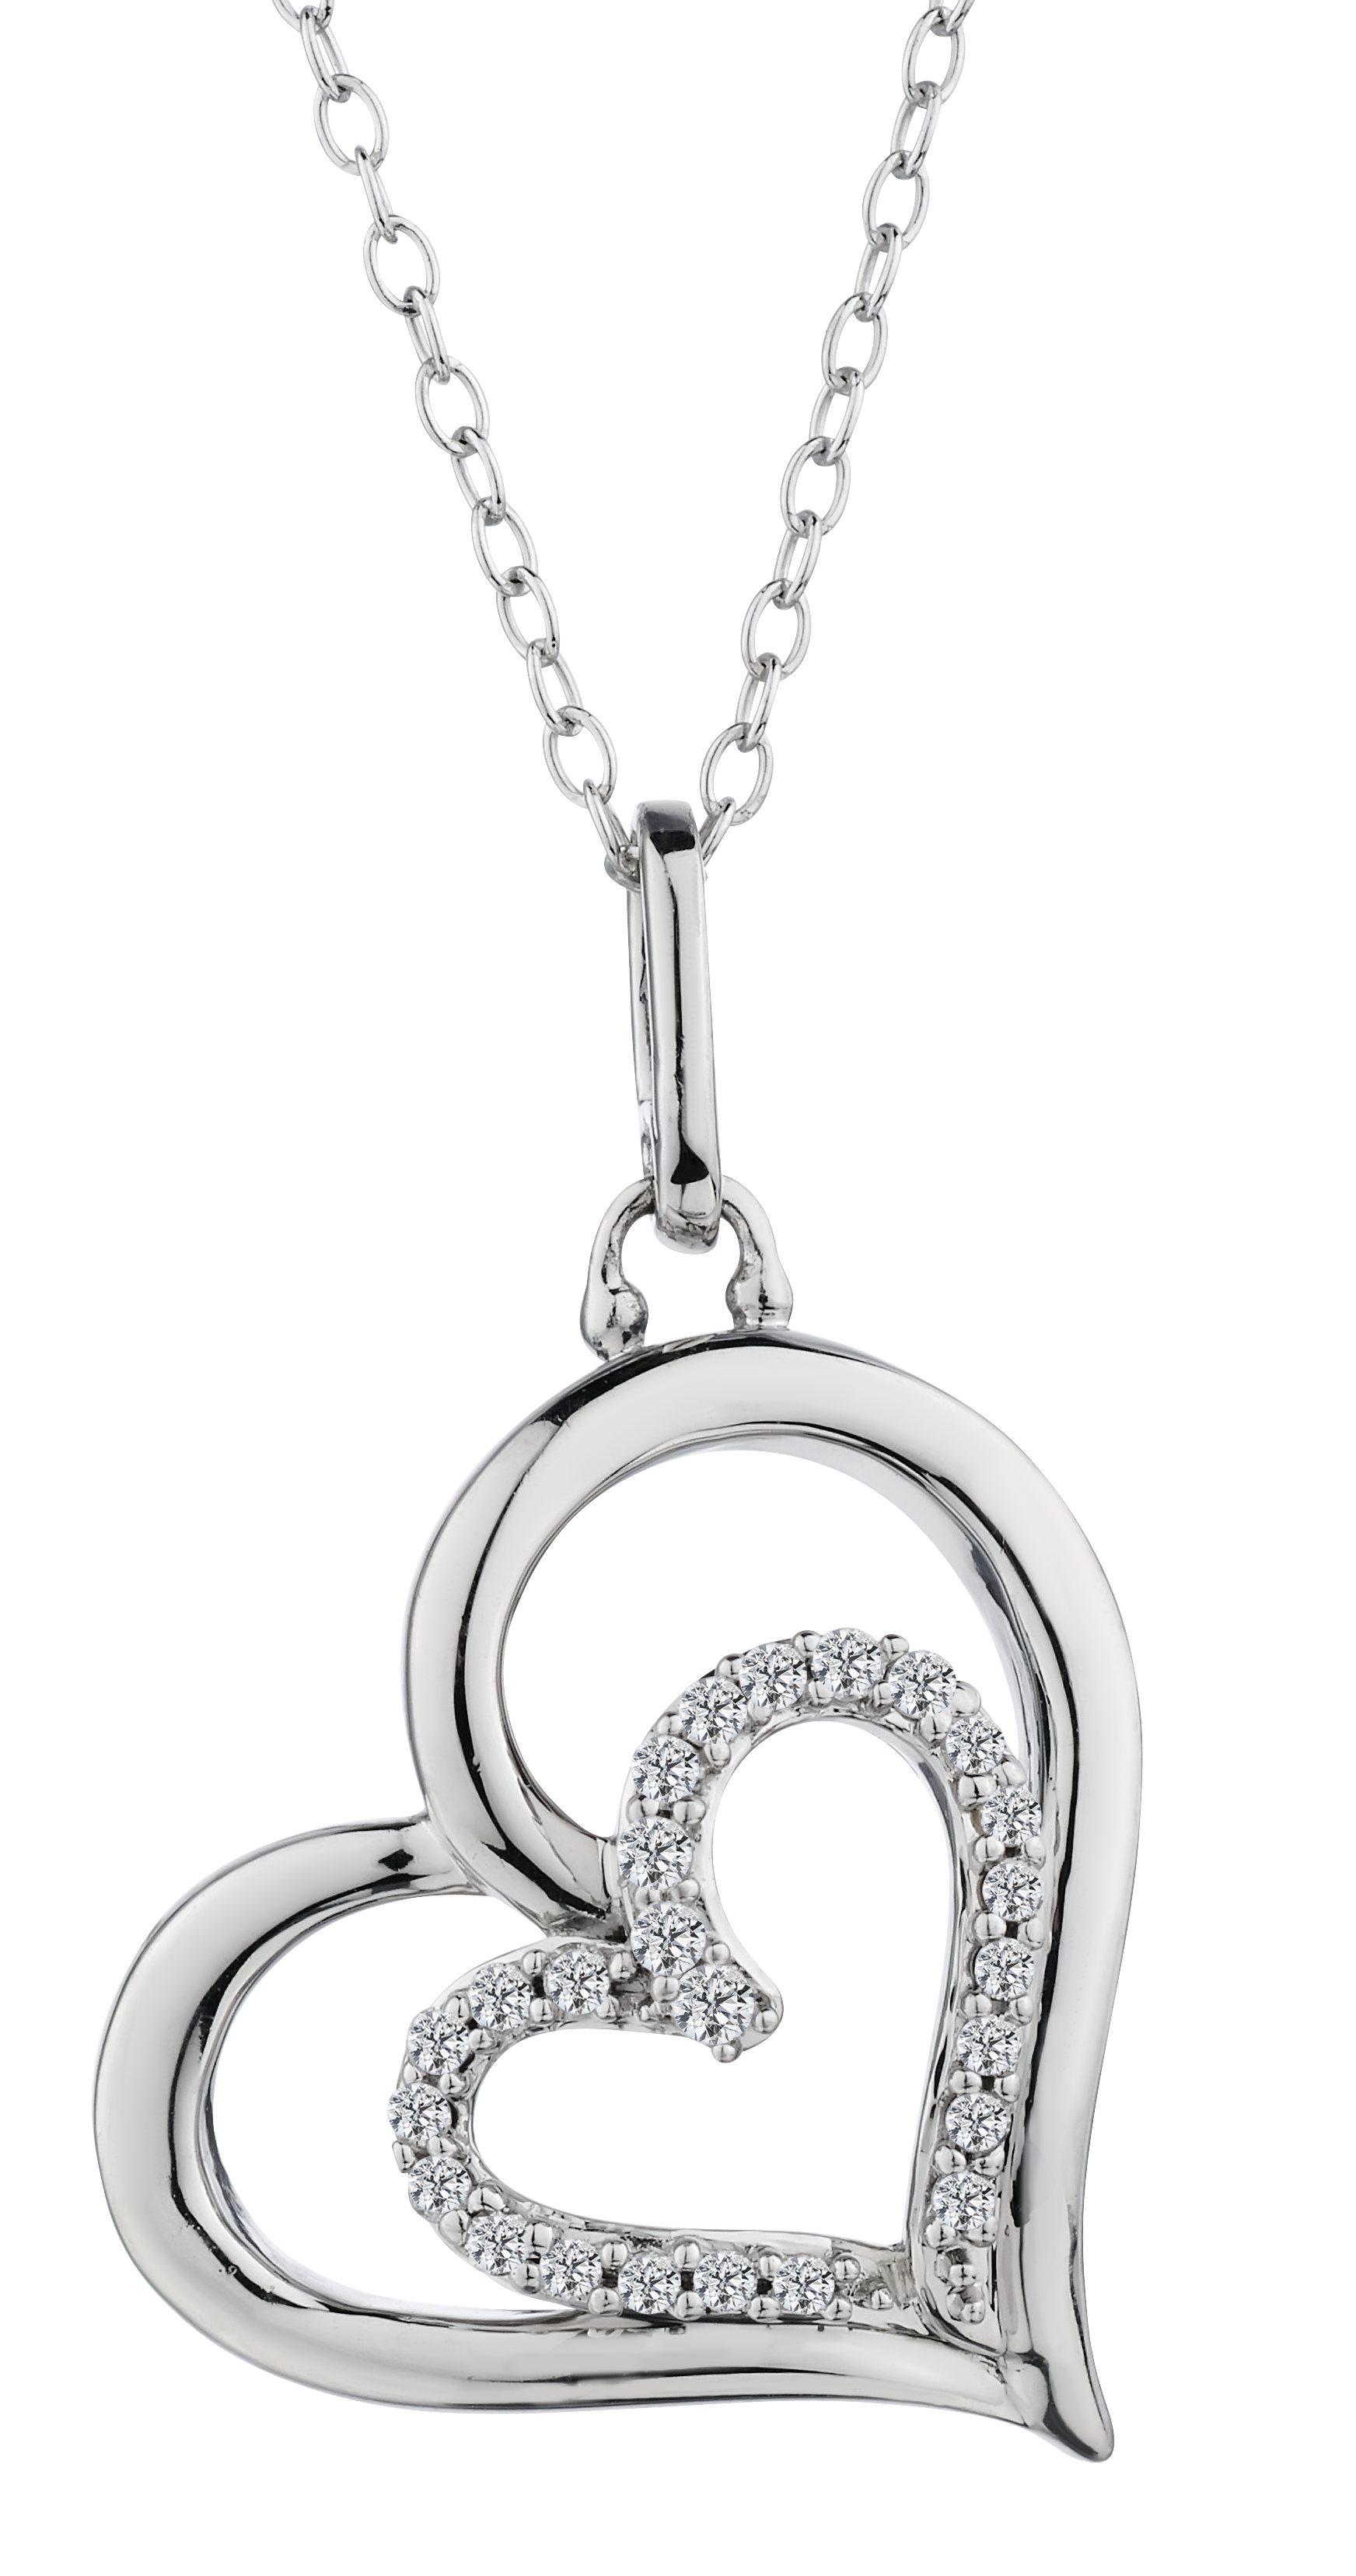 .15 Carat of Diamonds Double Heart Pendant, Silver.....................NOW